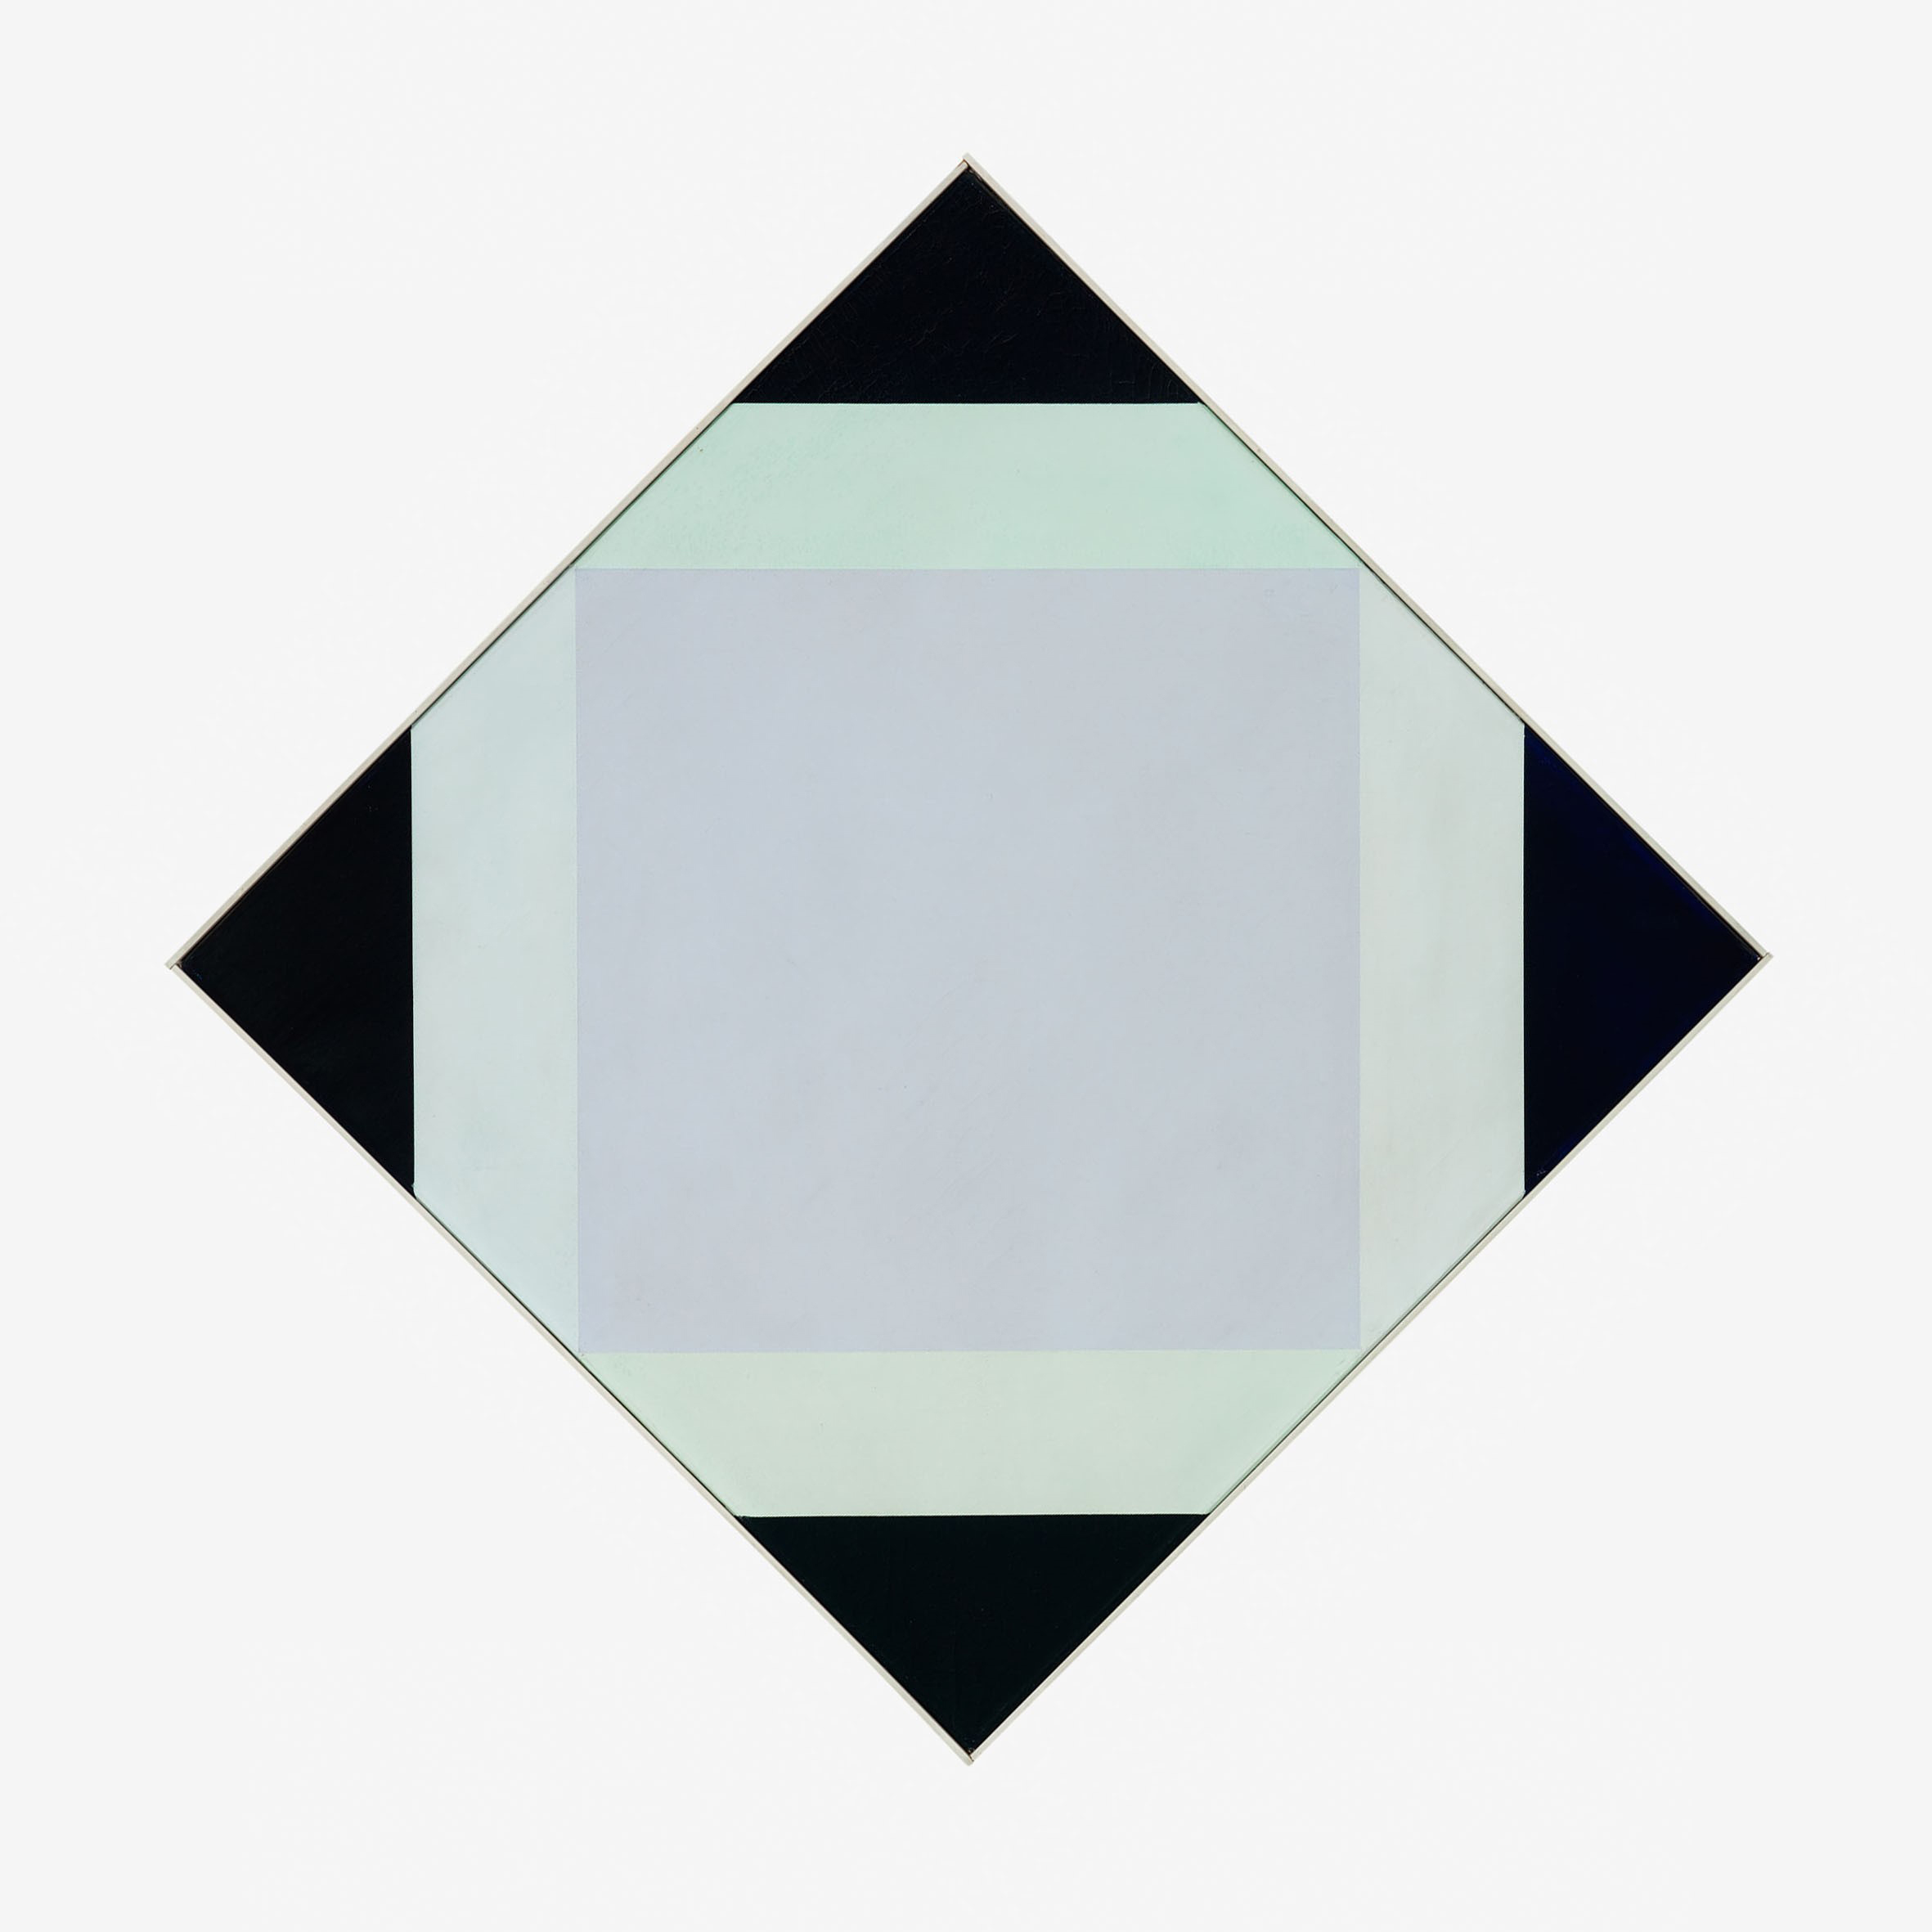 Max Bill, Světlé jádro, 1972/1973, olej, plátno, 62 × 62 cm
Max Bill, Heller Kern / Bright Nucleus, 1972/1973, oil on canvas, 62 × 62 cm    Foto © Galerie hlavního města Prahy